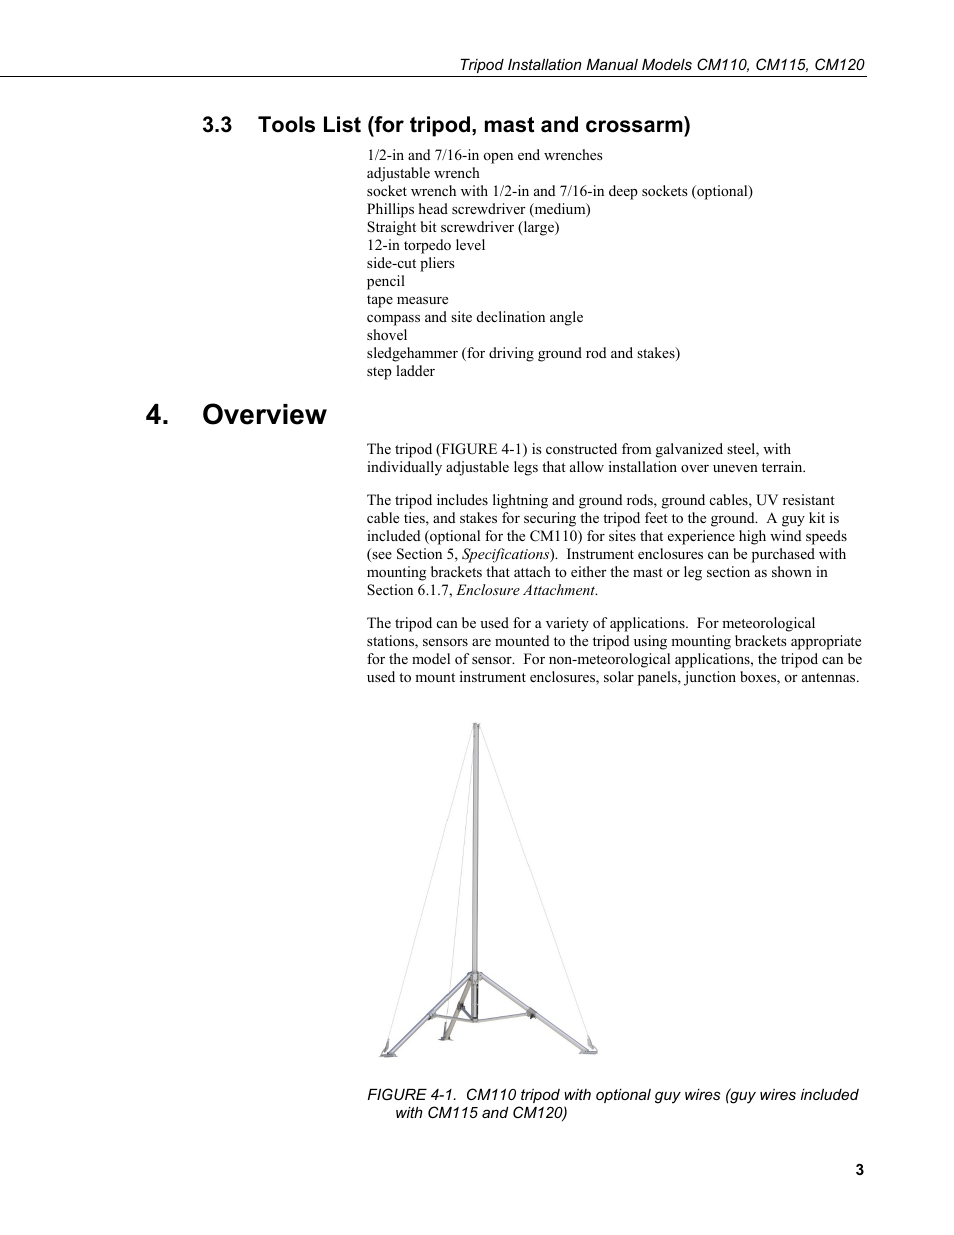 3 tools list (for tripod, mast and crossarm), Overview, Tools list (for tripod, mast and crossarm) | Cm115 and cm120) | Campbell Scientific CM110, CM115, CM120 Tripod Installation User Manual | Page 11 / 40